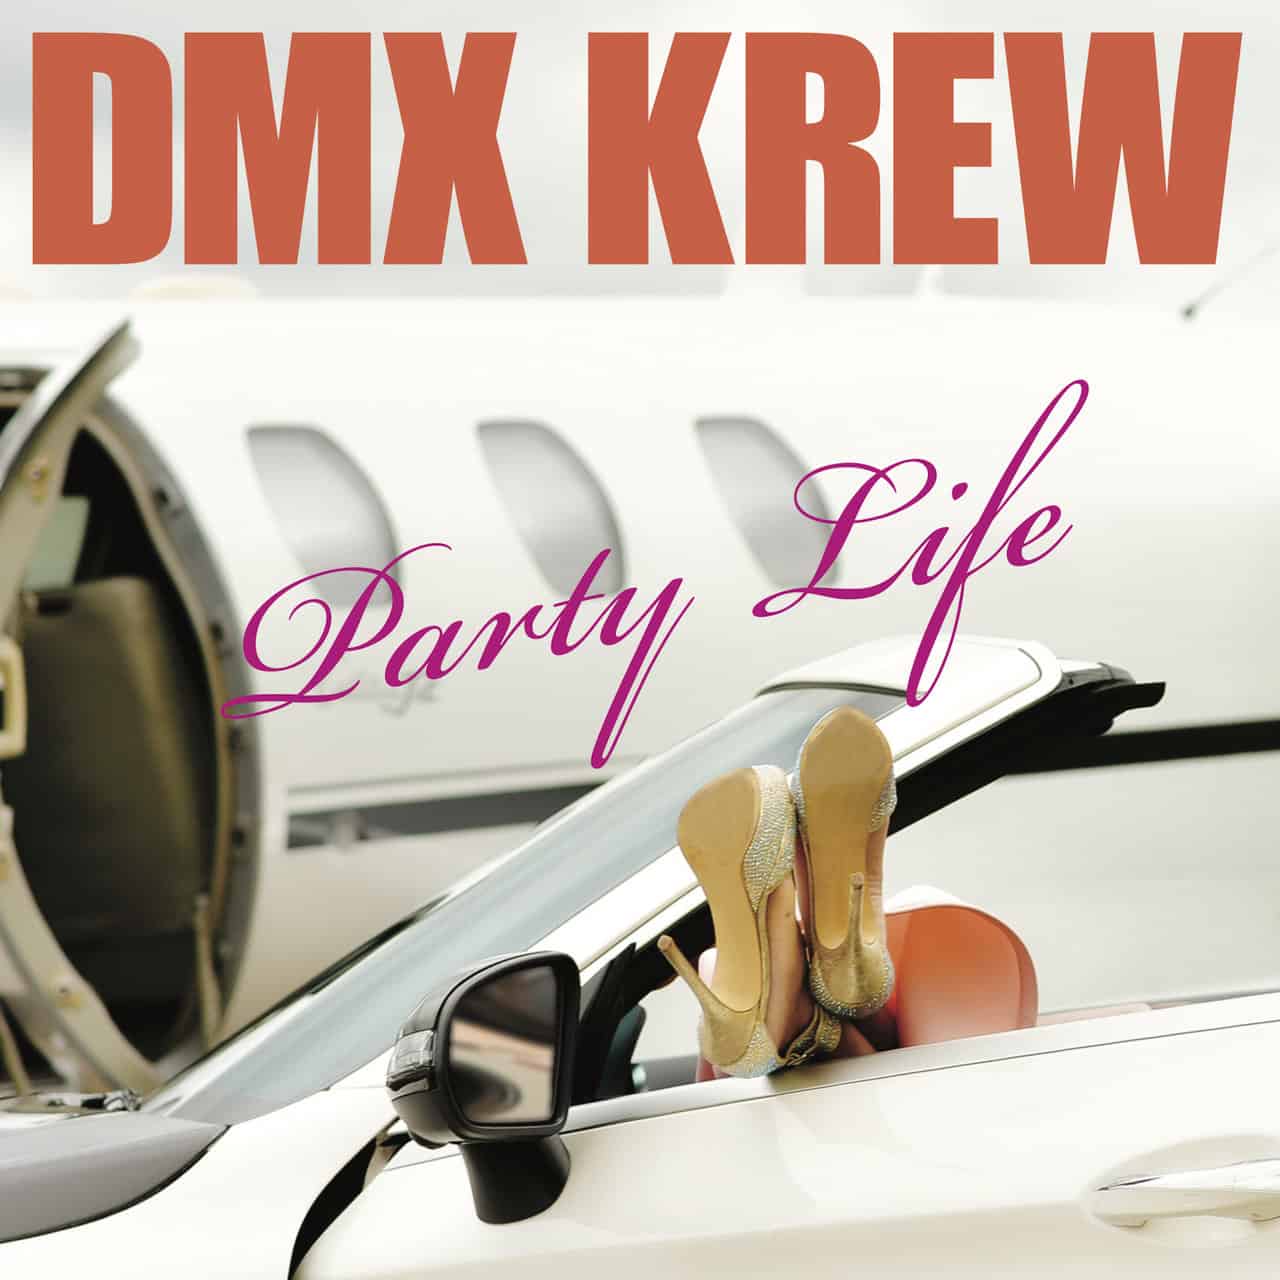 Download Dmx Krew - Party Life on Electrobuzz